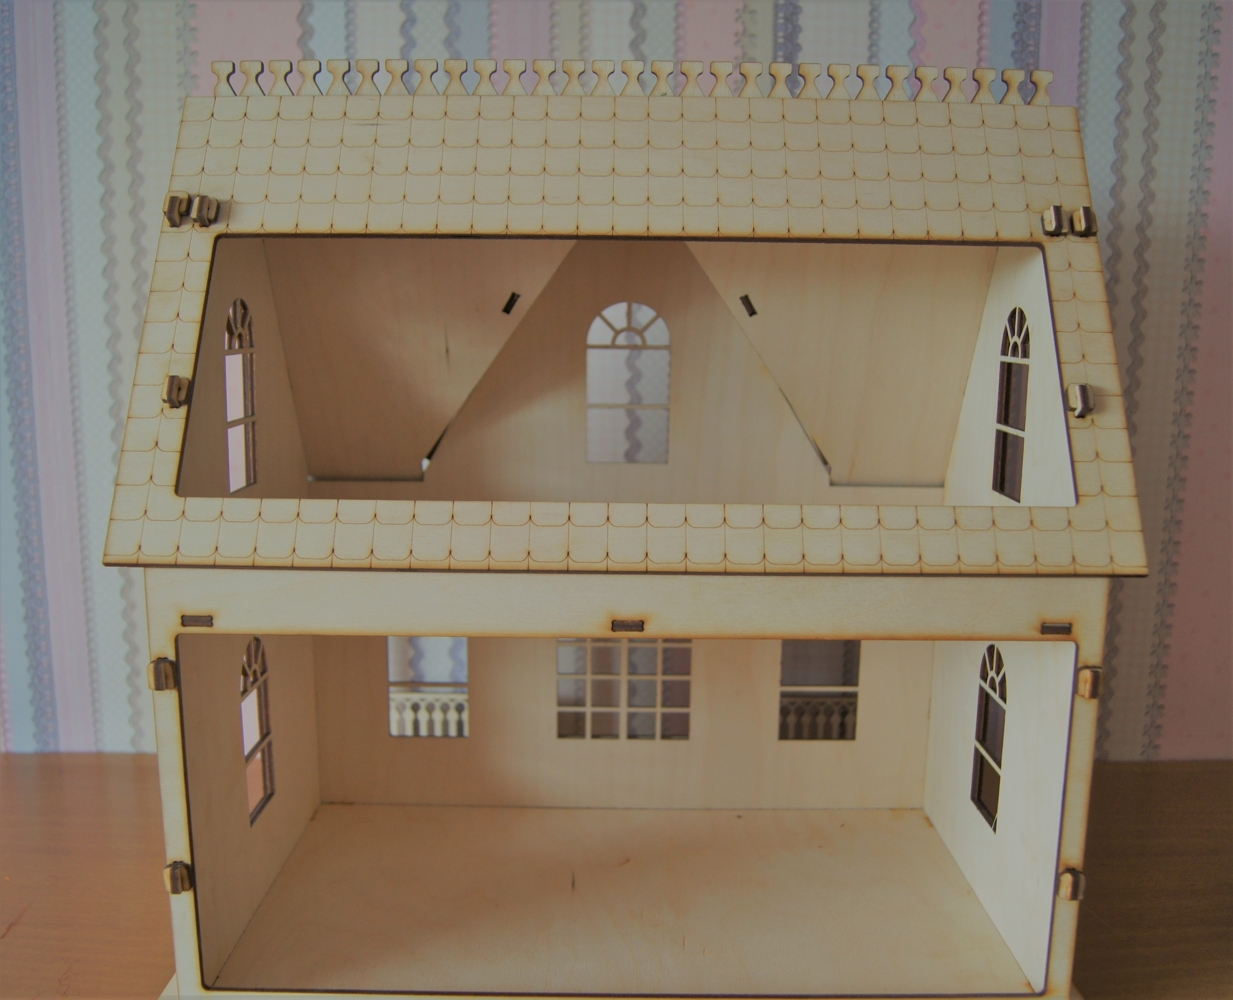 Laser Cut Wooden Model House Free Vector